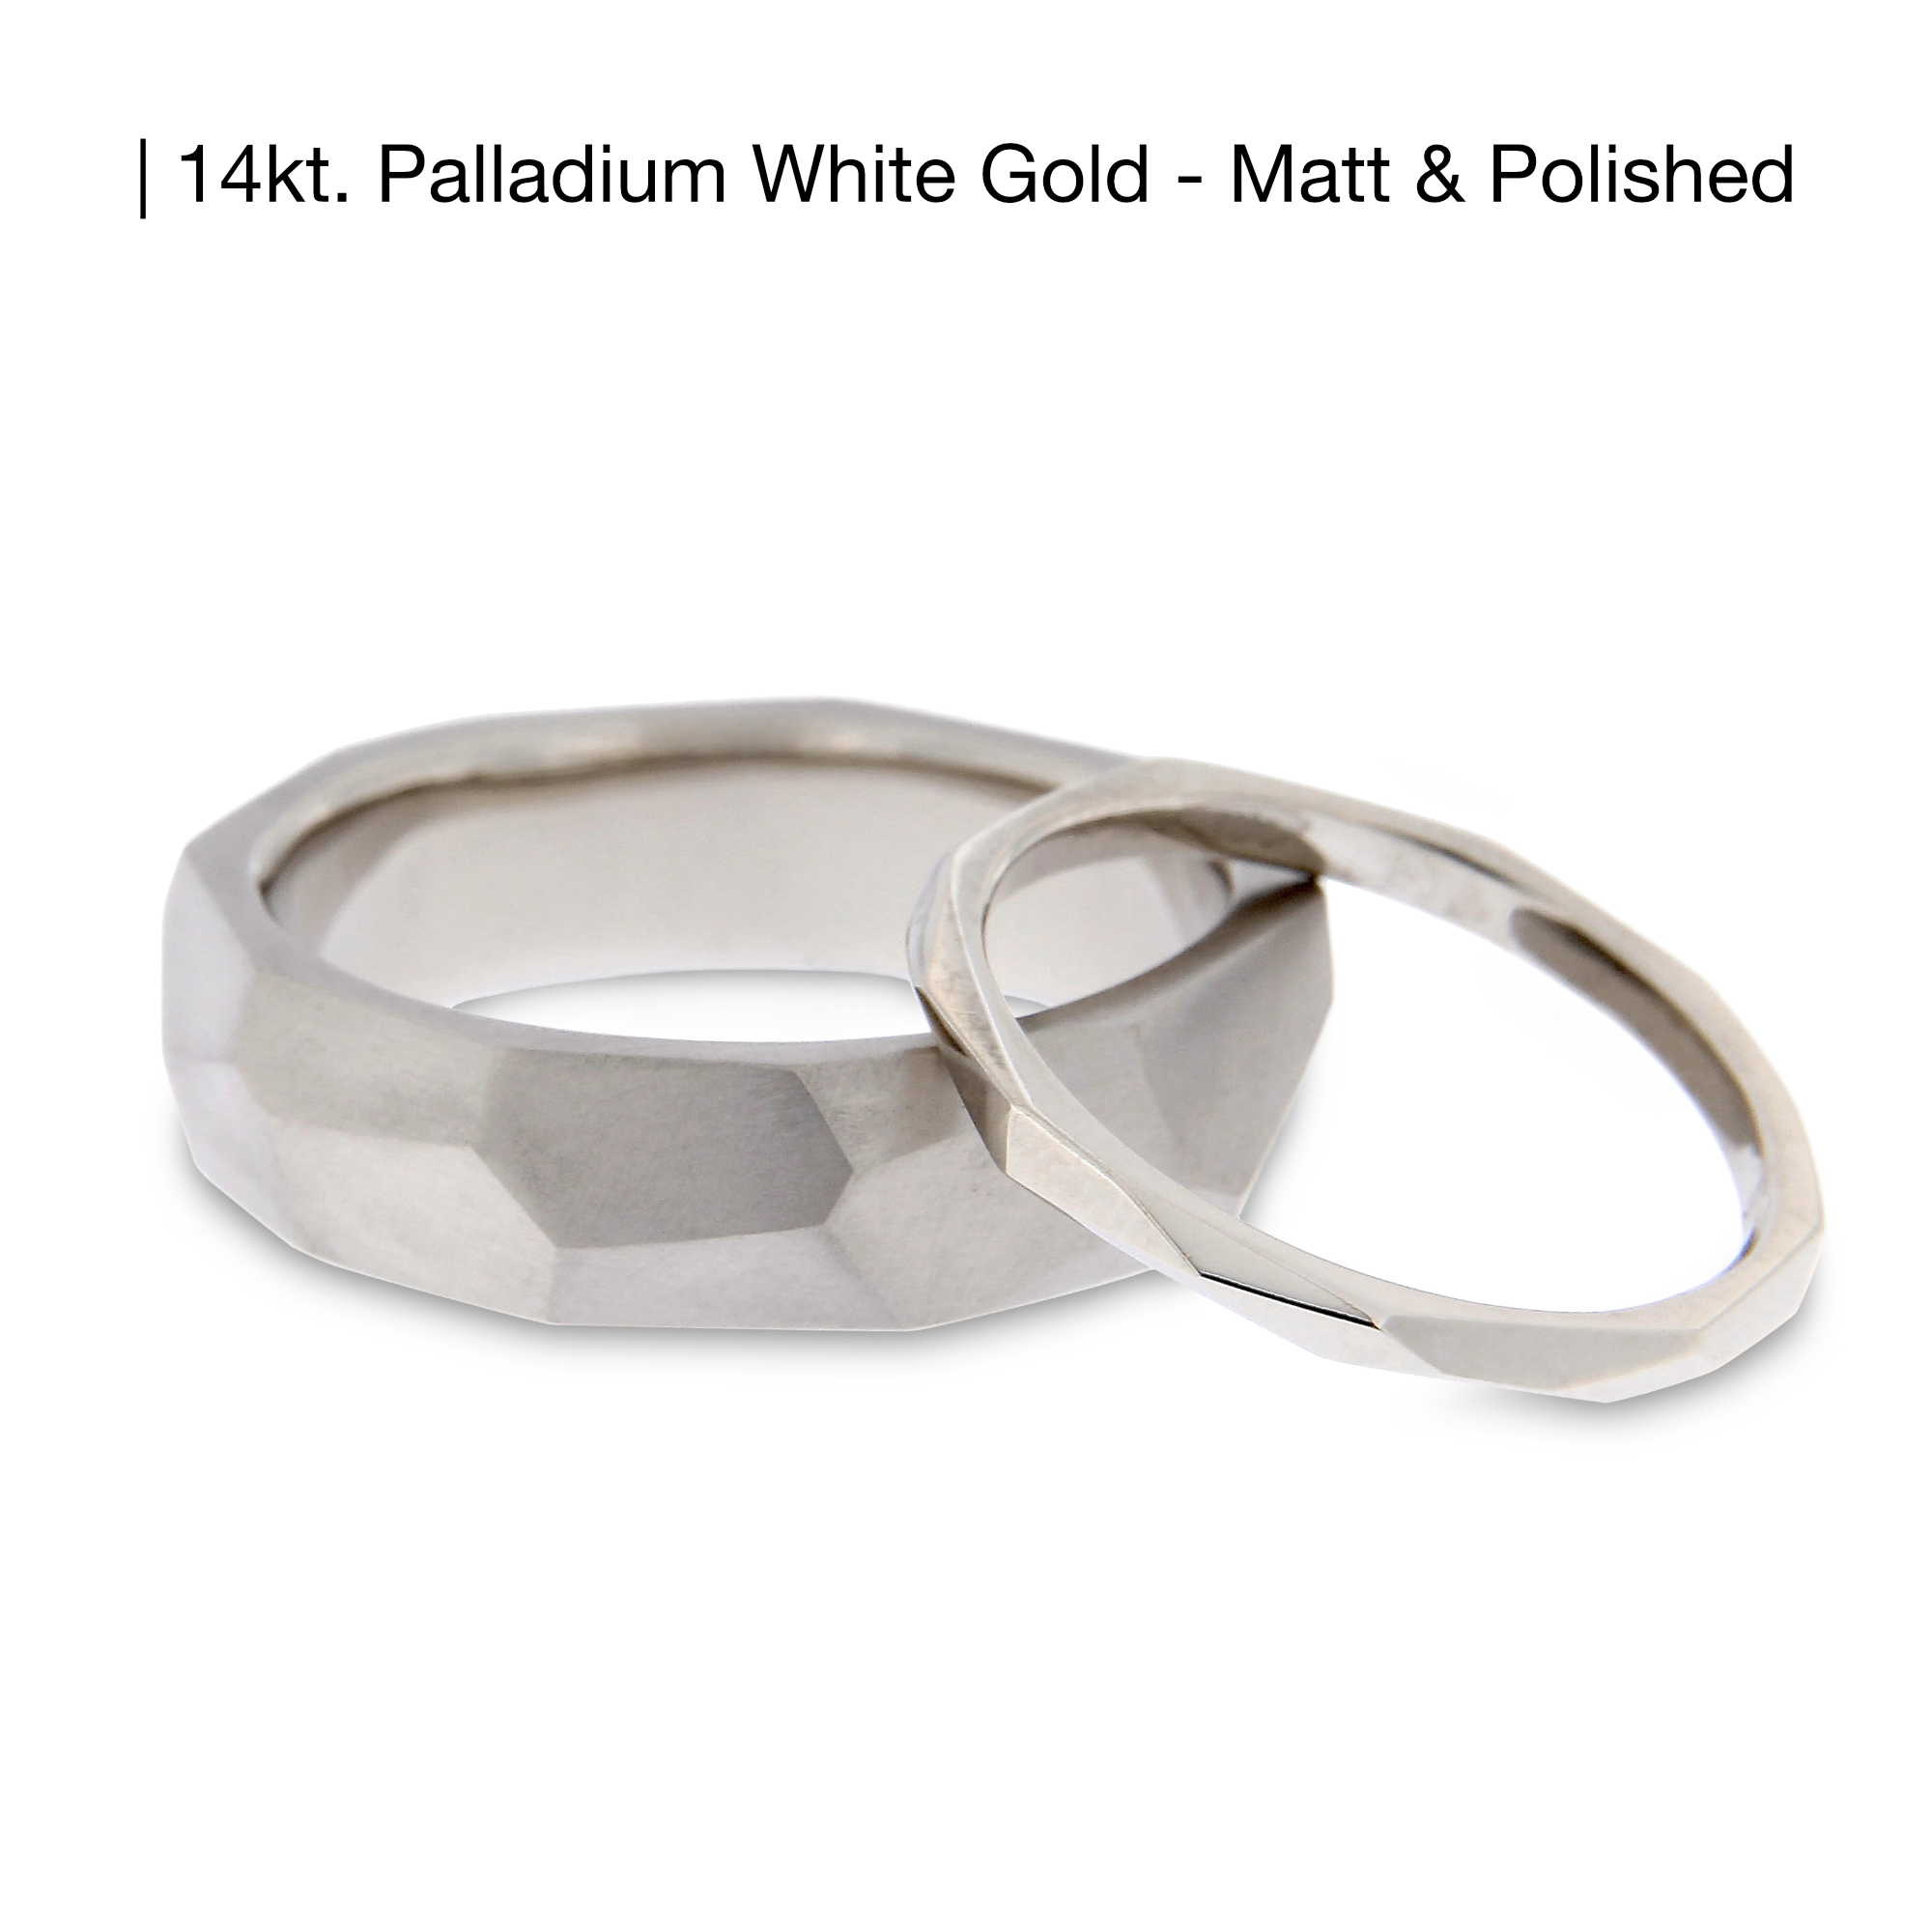 14 kt palladium white gold, matt and polished, diamonds, Katie G.  Jewellery